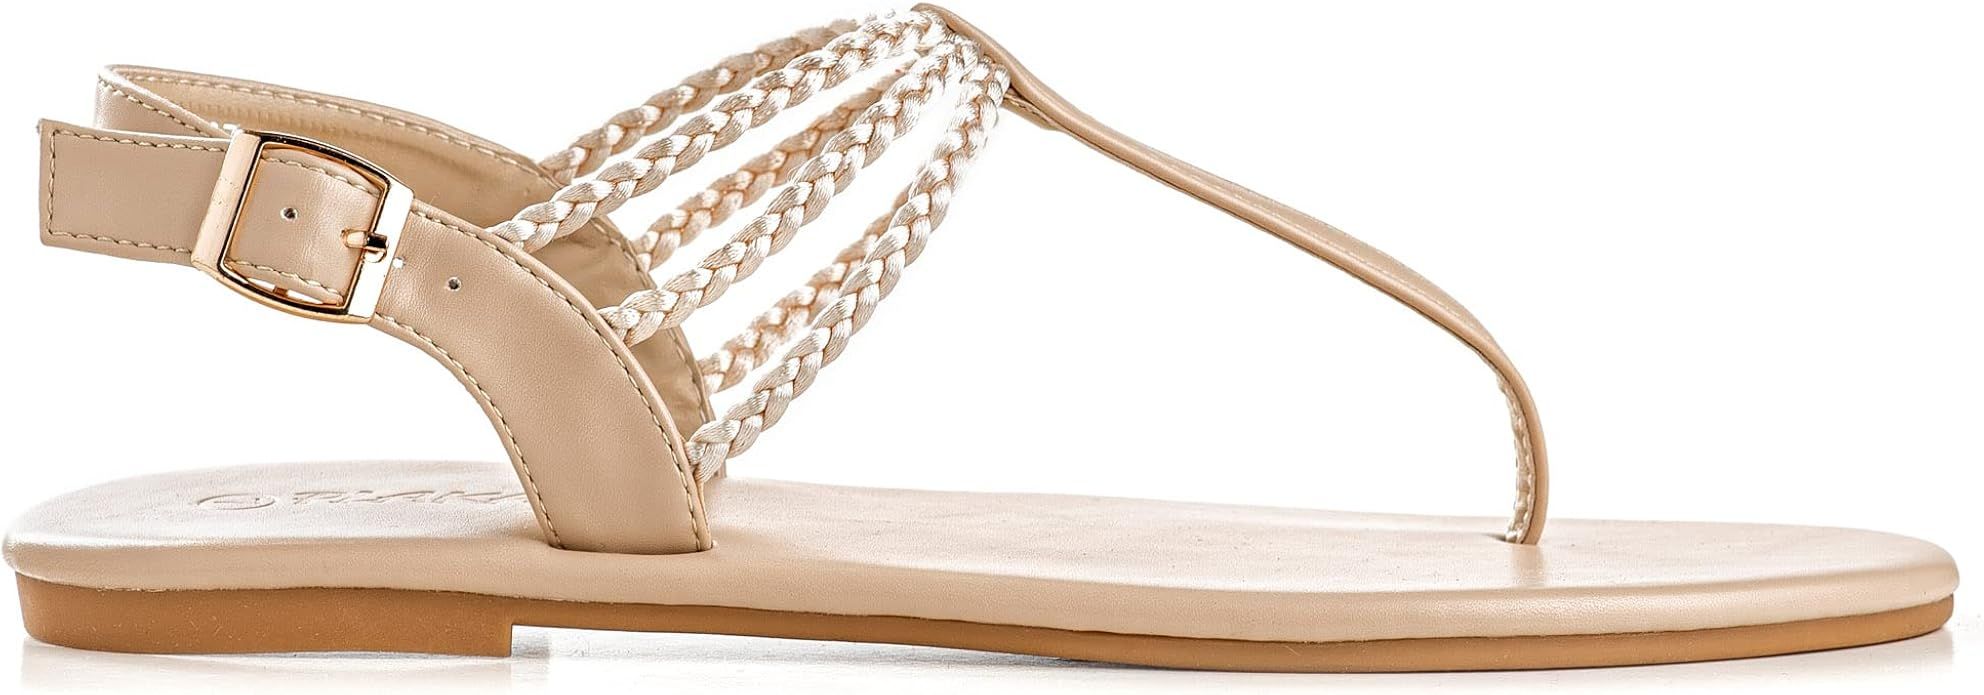 Plaka Rappel Flat Sandals for Women - Evening Dressy Footwear, Thong Strappy Shoes - Fashion Summ... | Amazon (US)